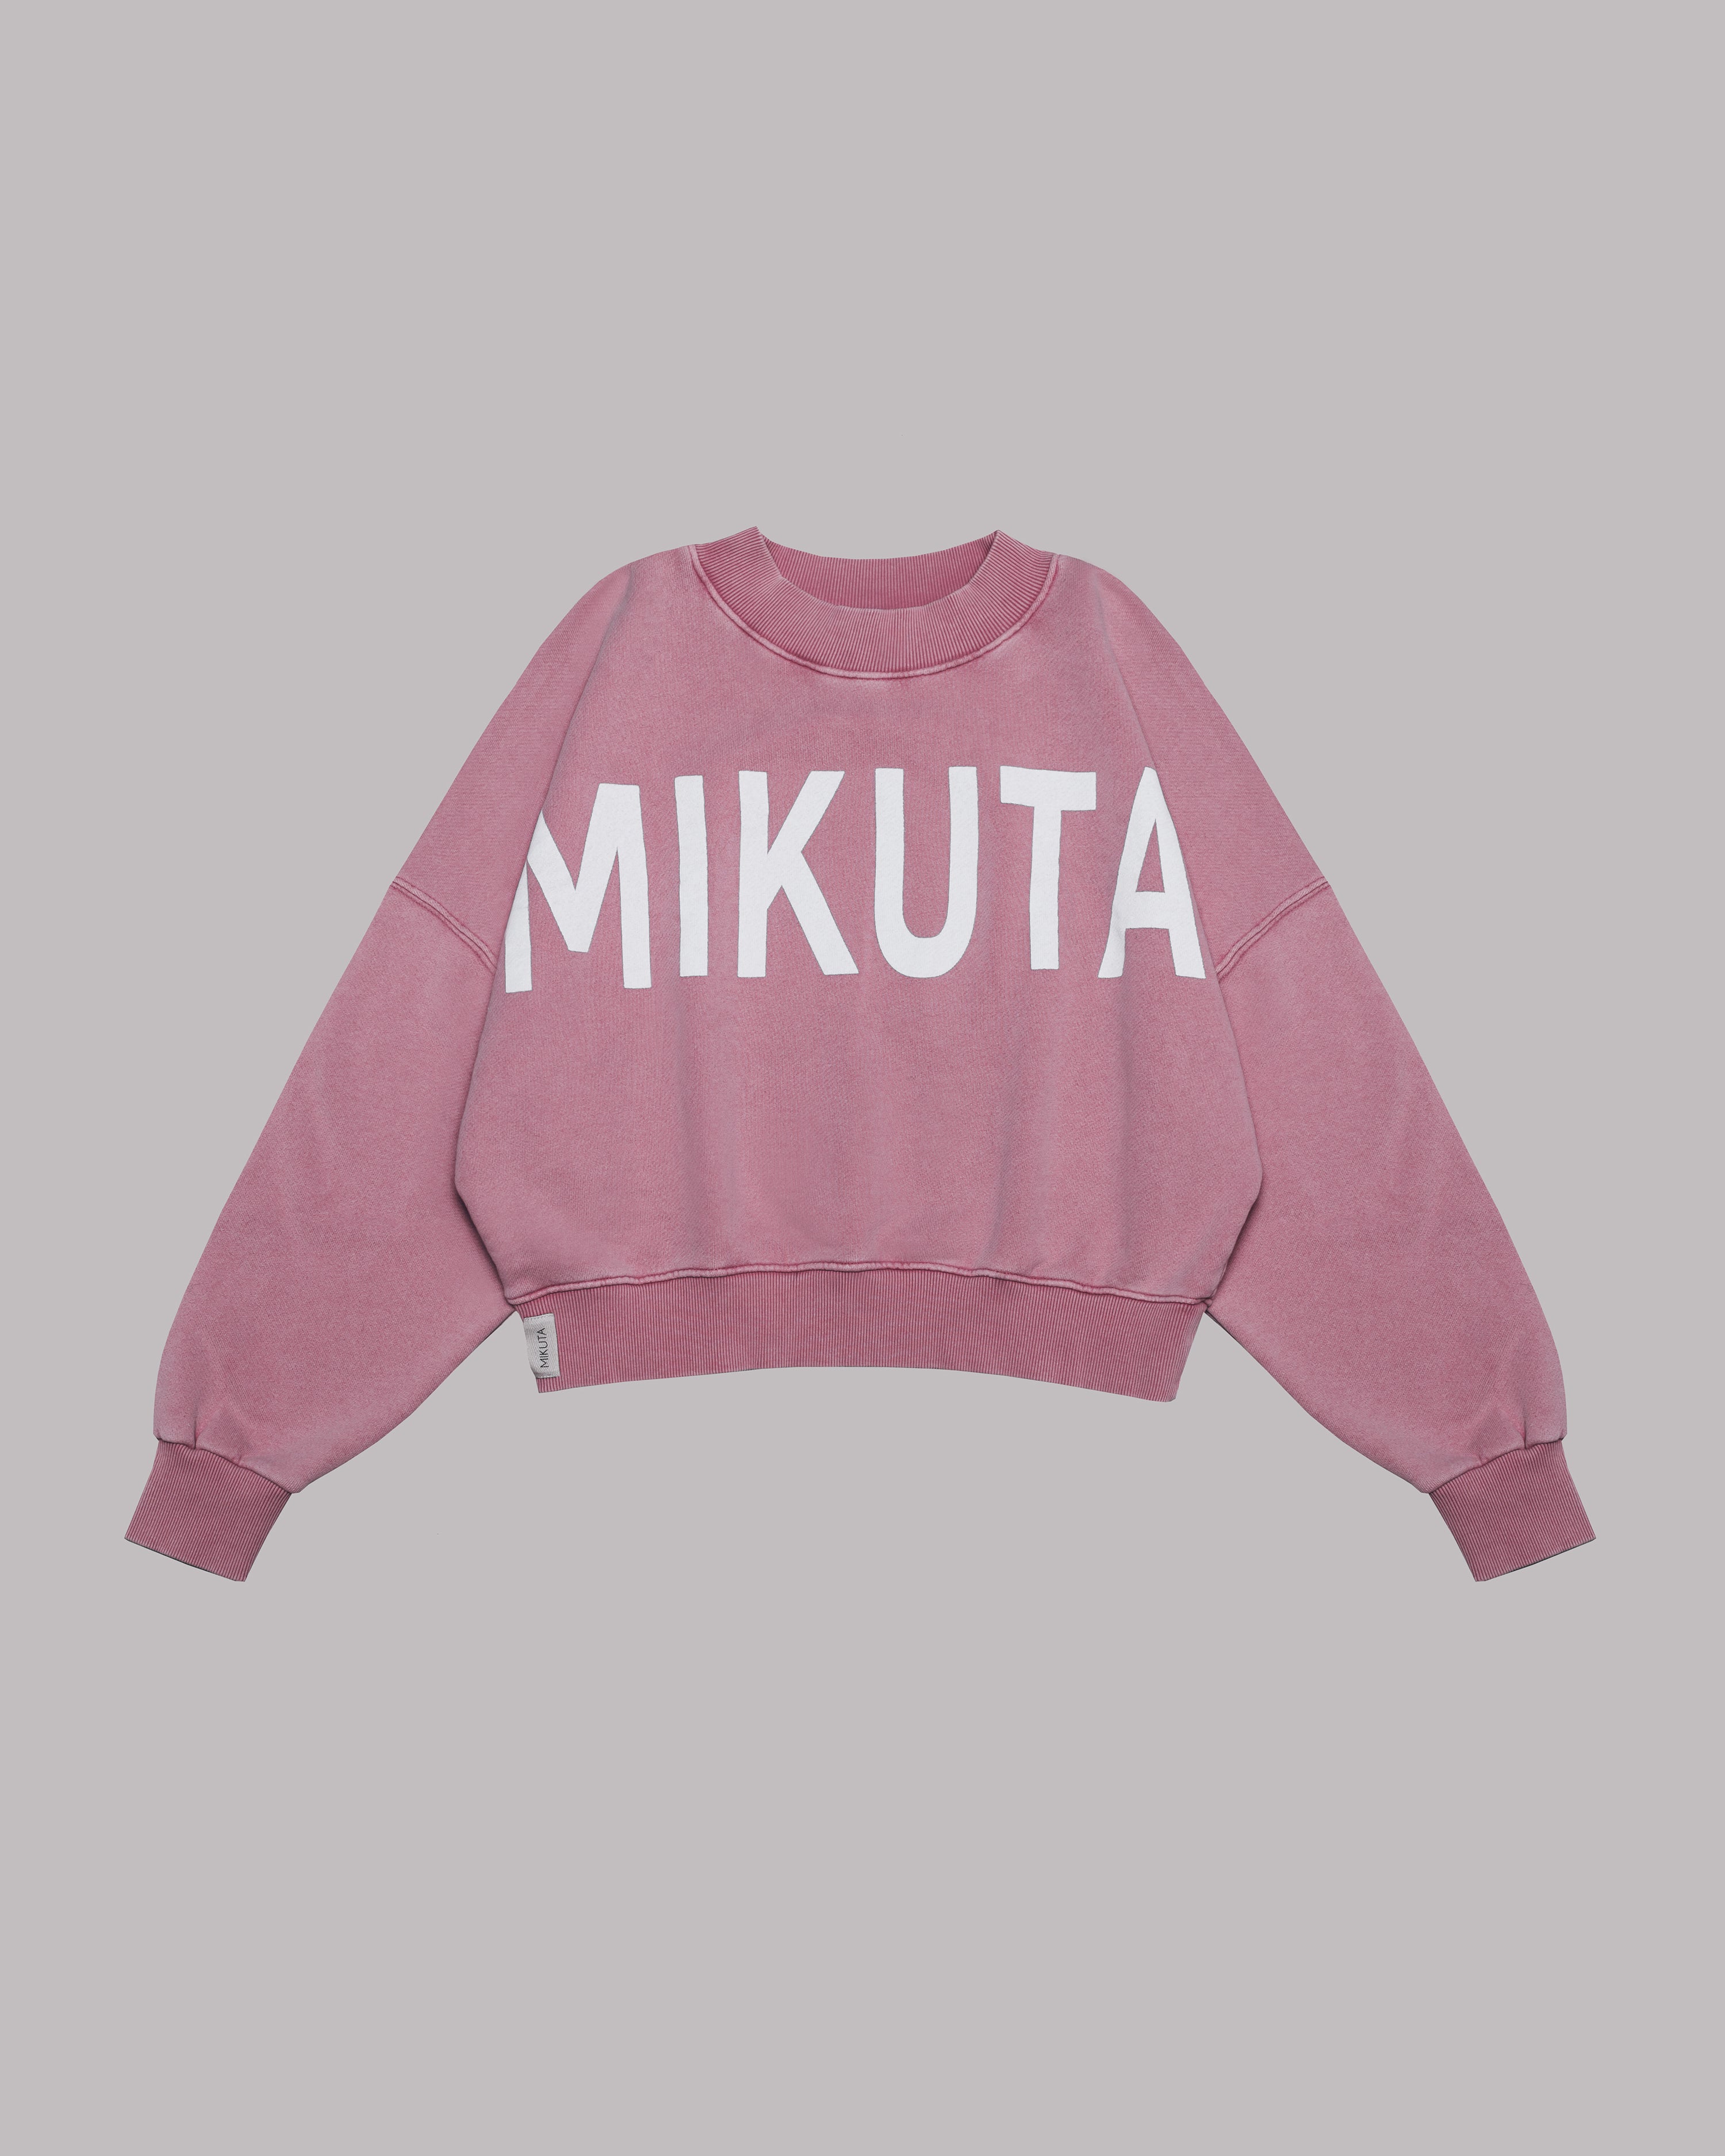 The Pink Faded Mikuta Sweater